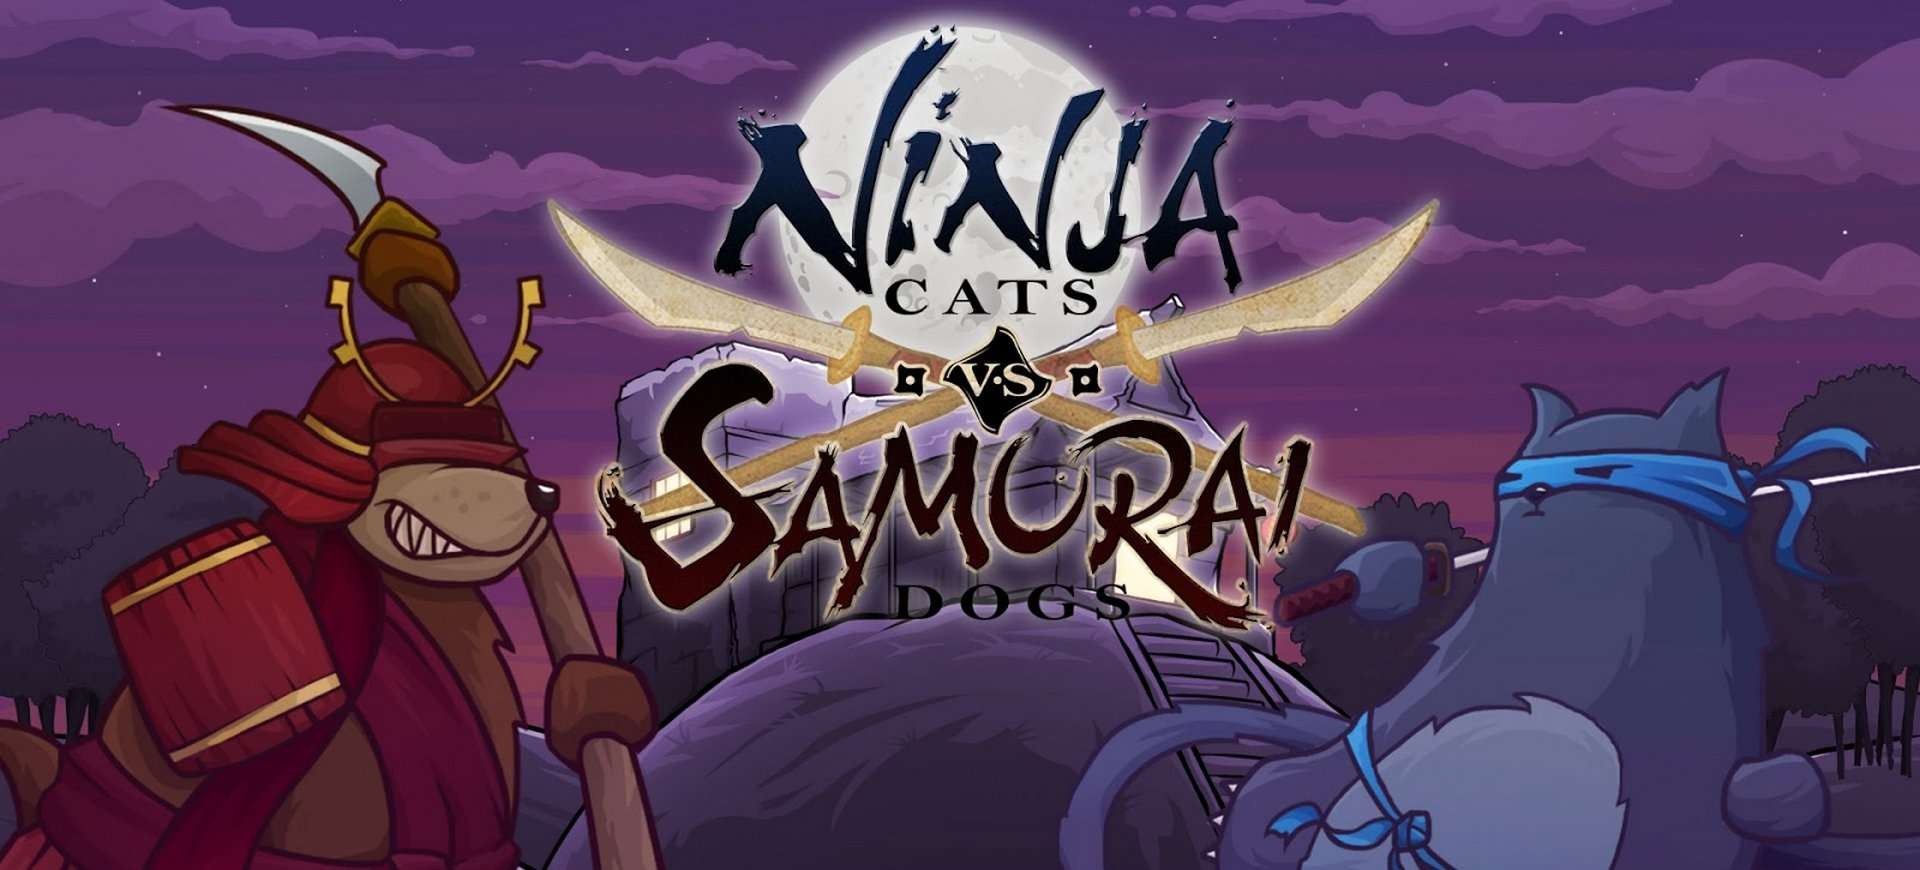 Ninja Cats vs Samurai Dogs - Đánh Giá Game